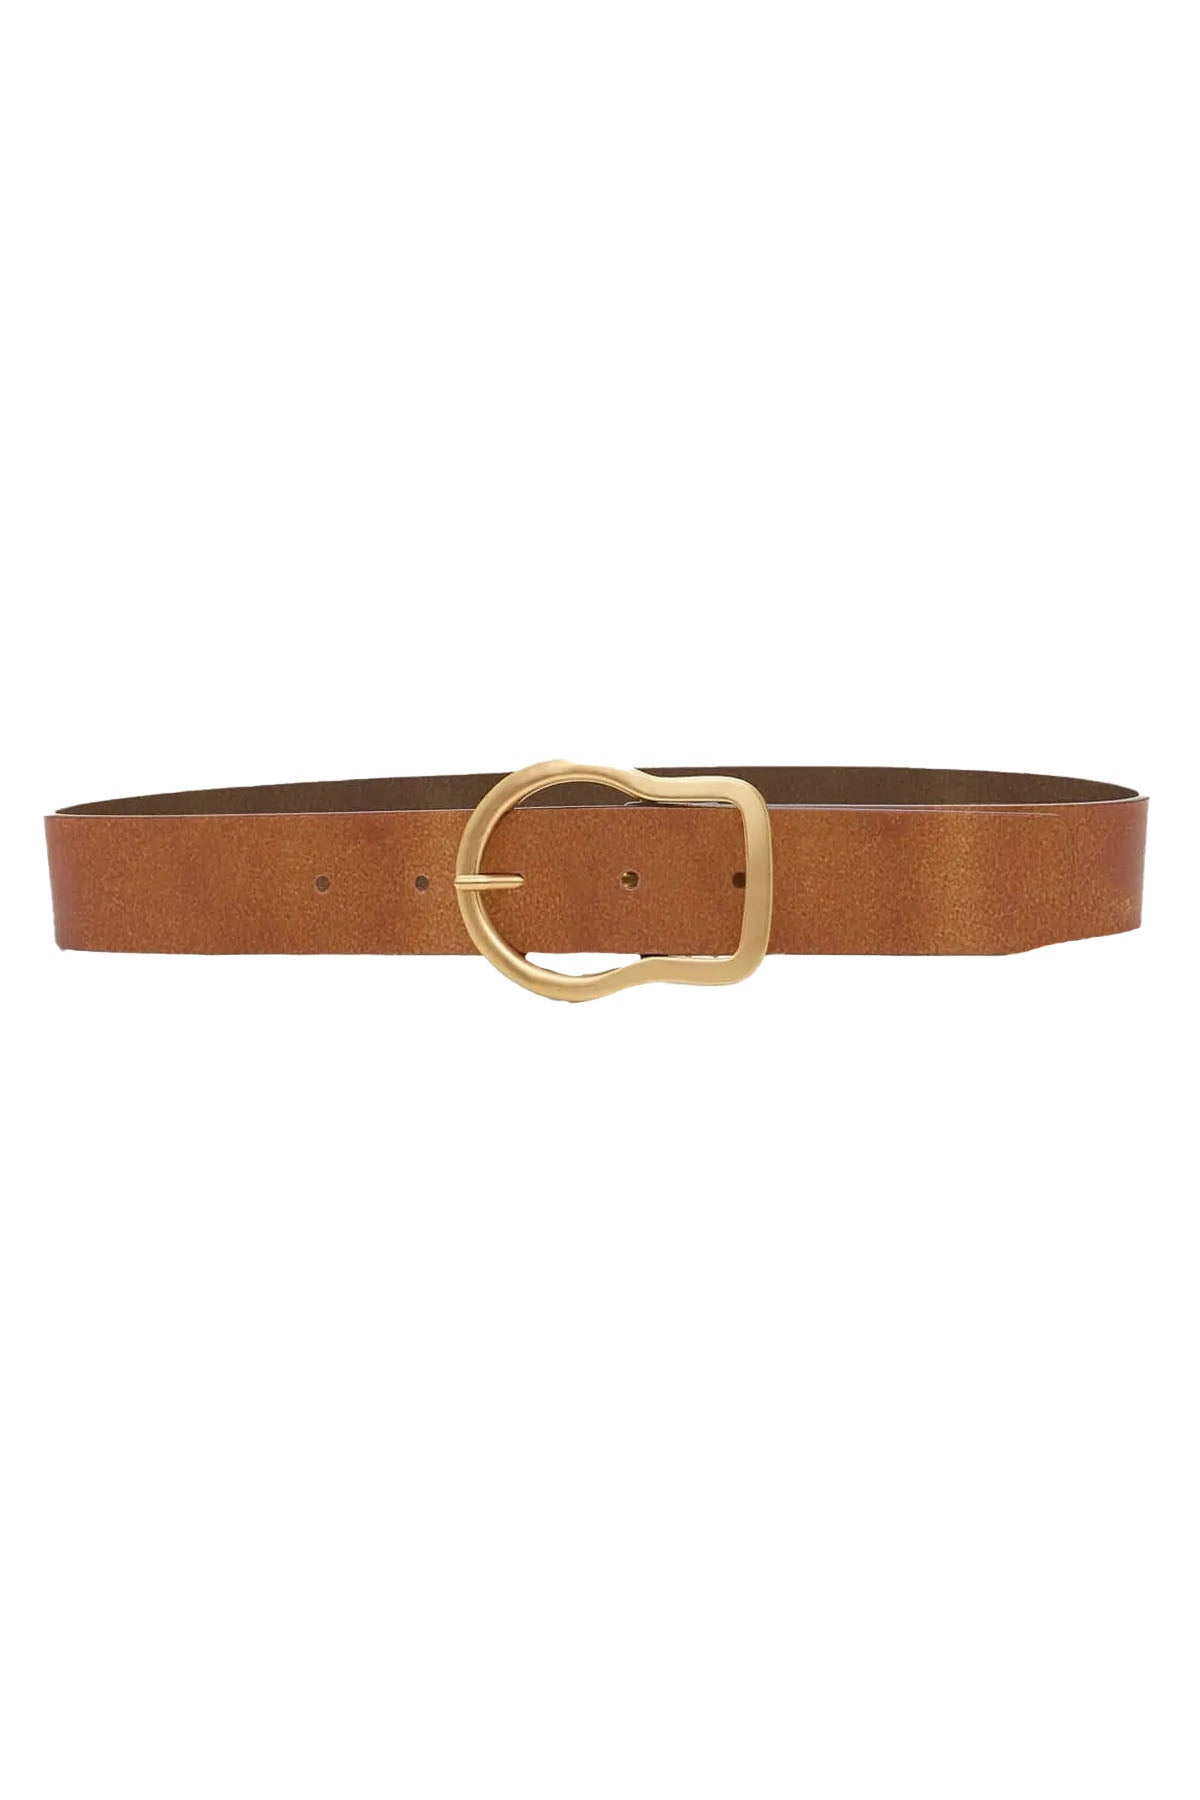 waxed statement belt - distressed brown